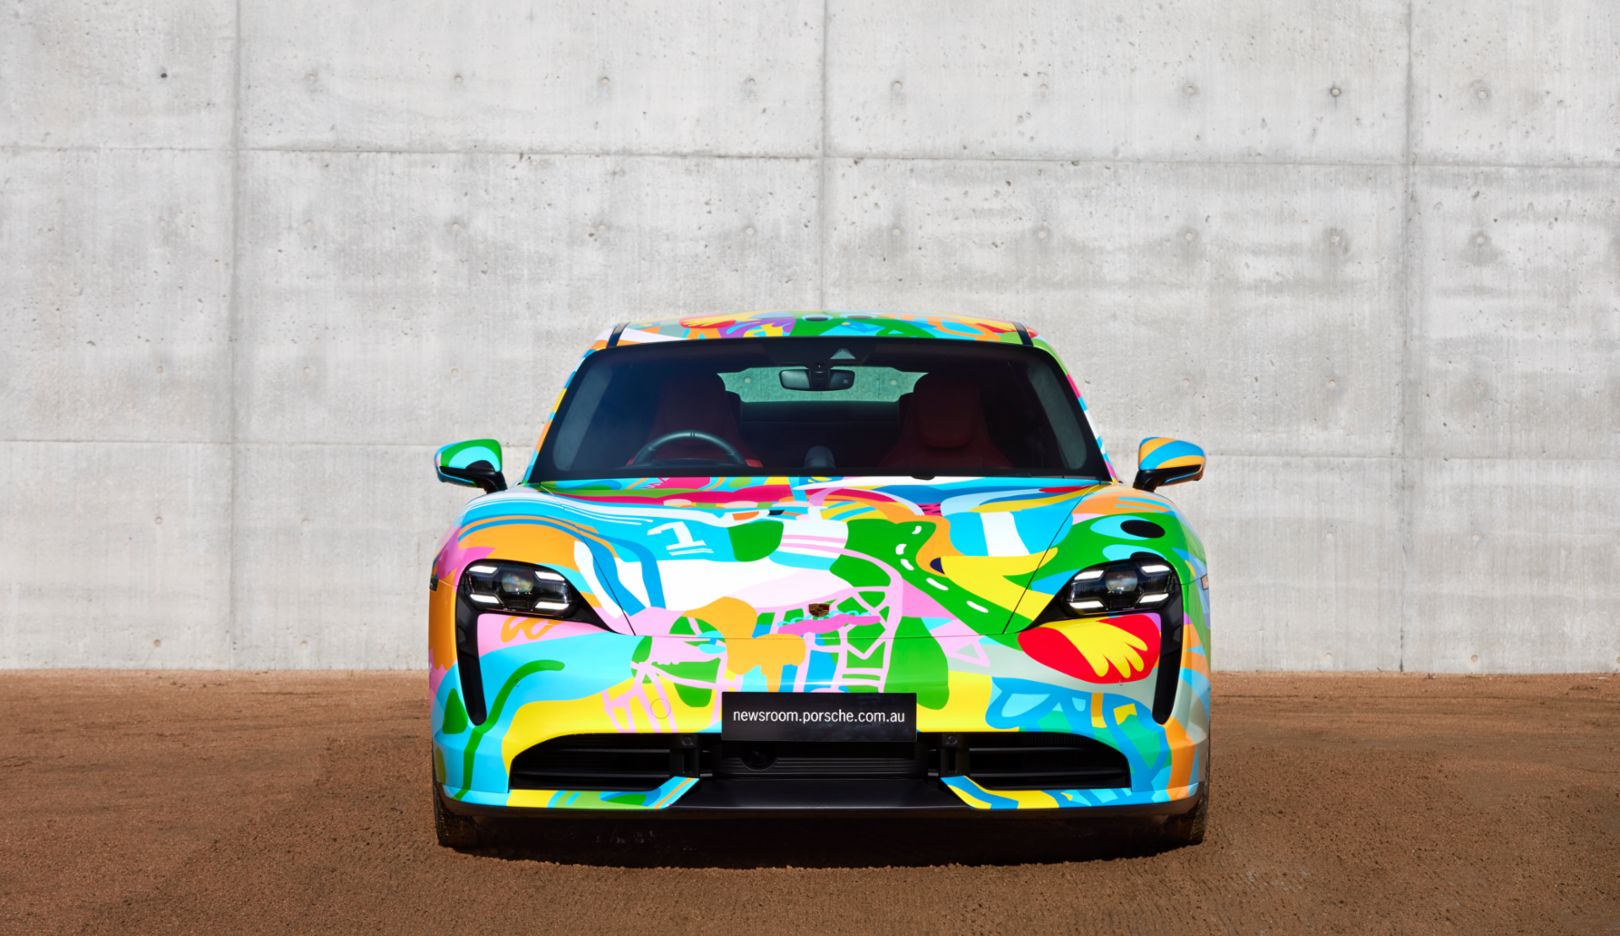 Porsche Cars Australia commissions ‘digital Taycan art car’ for a good cause - Image 1